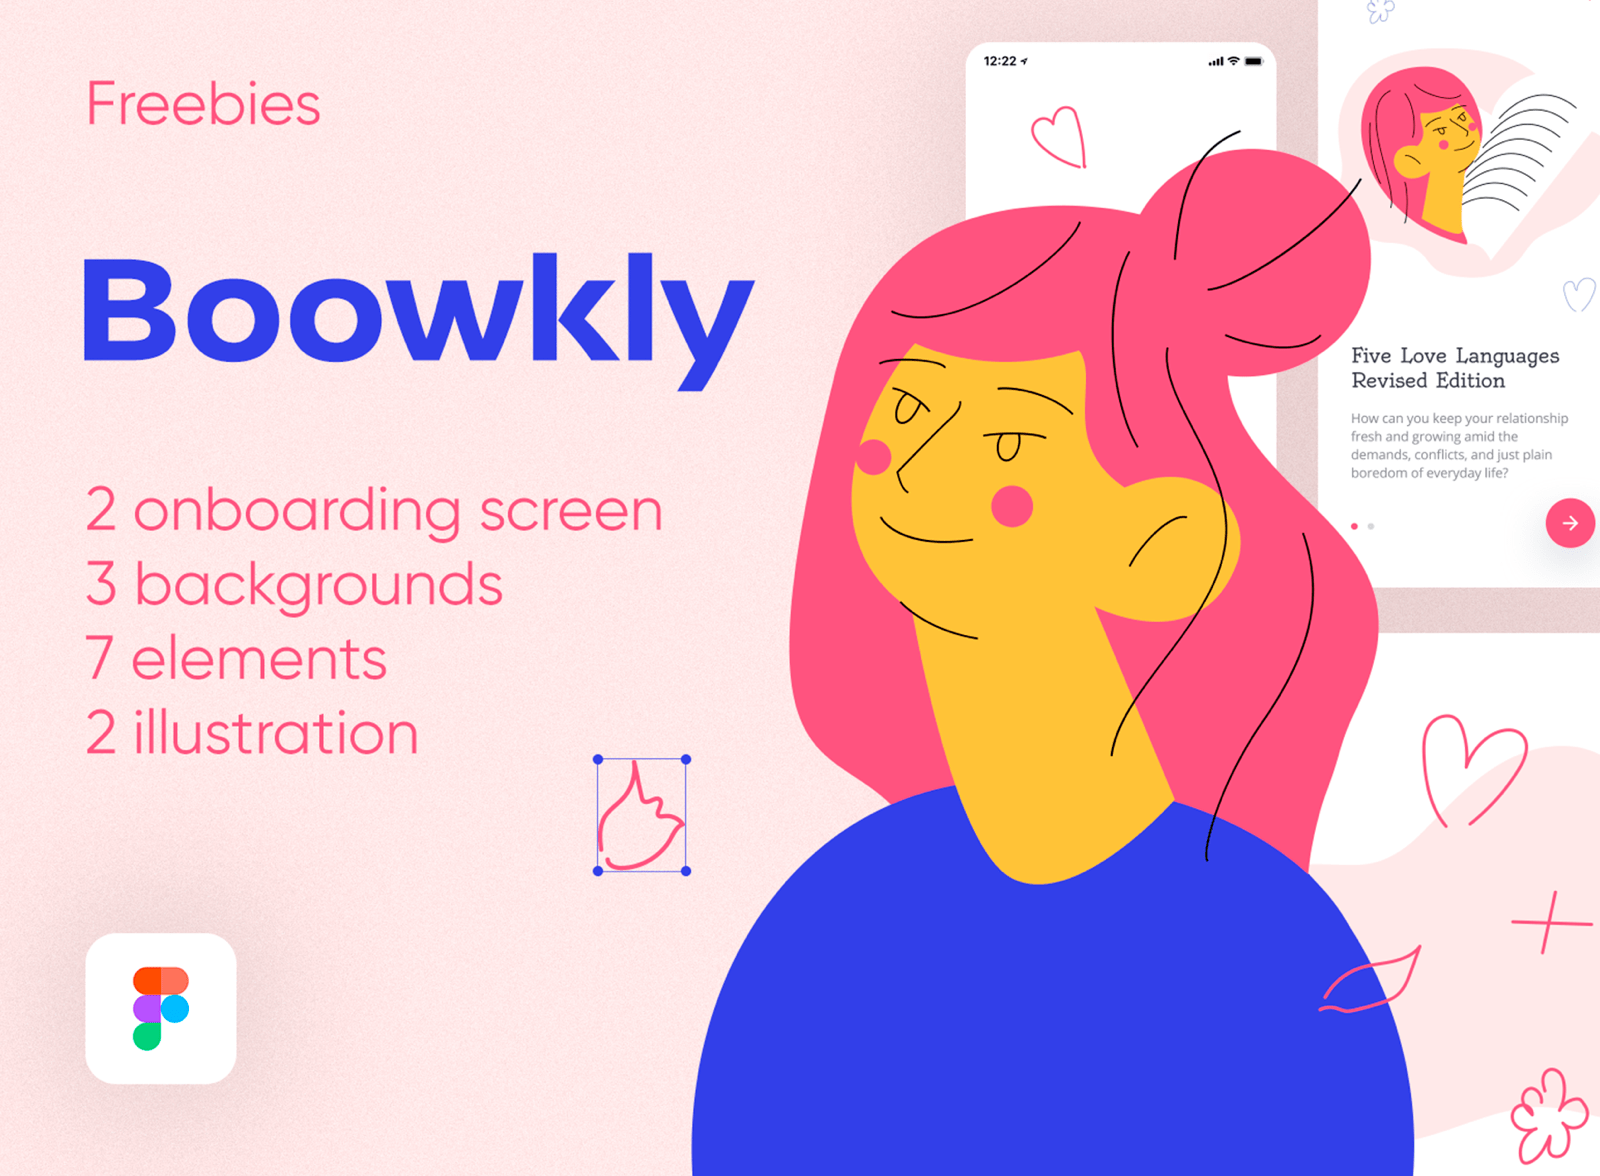 Free Boowkly Illustration Kit